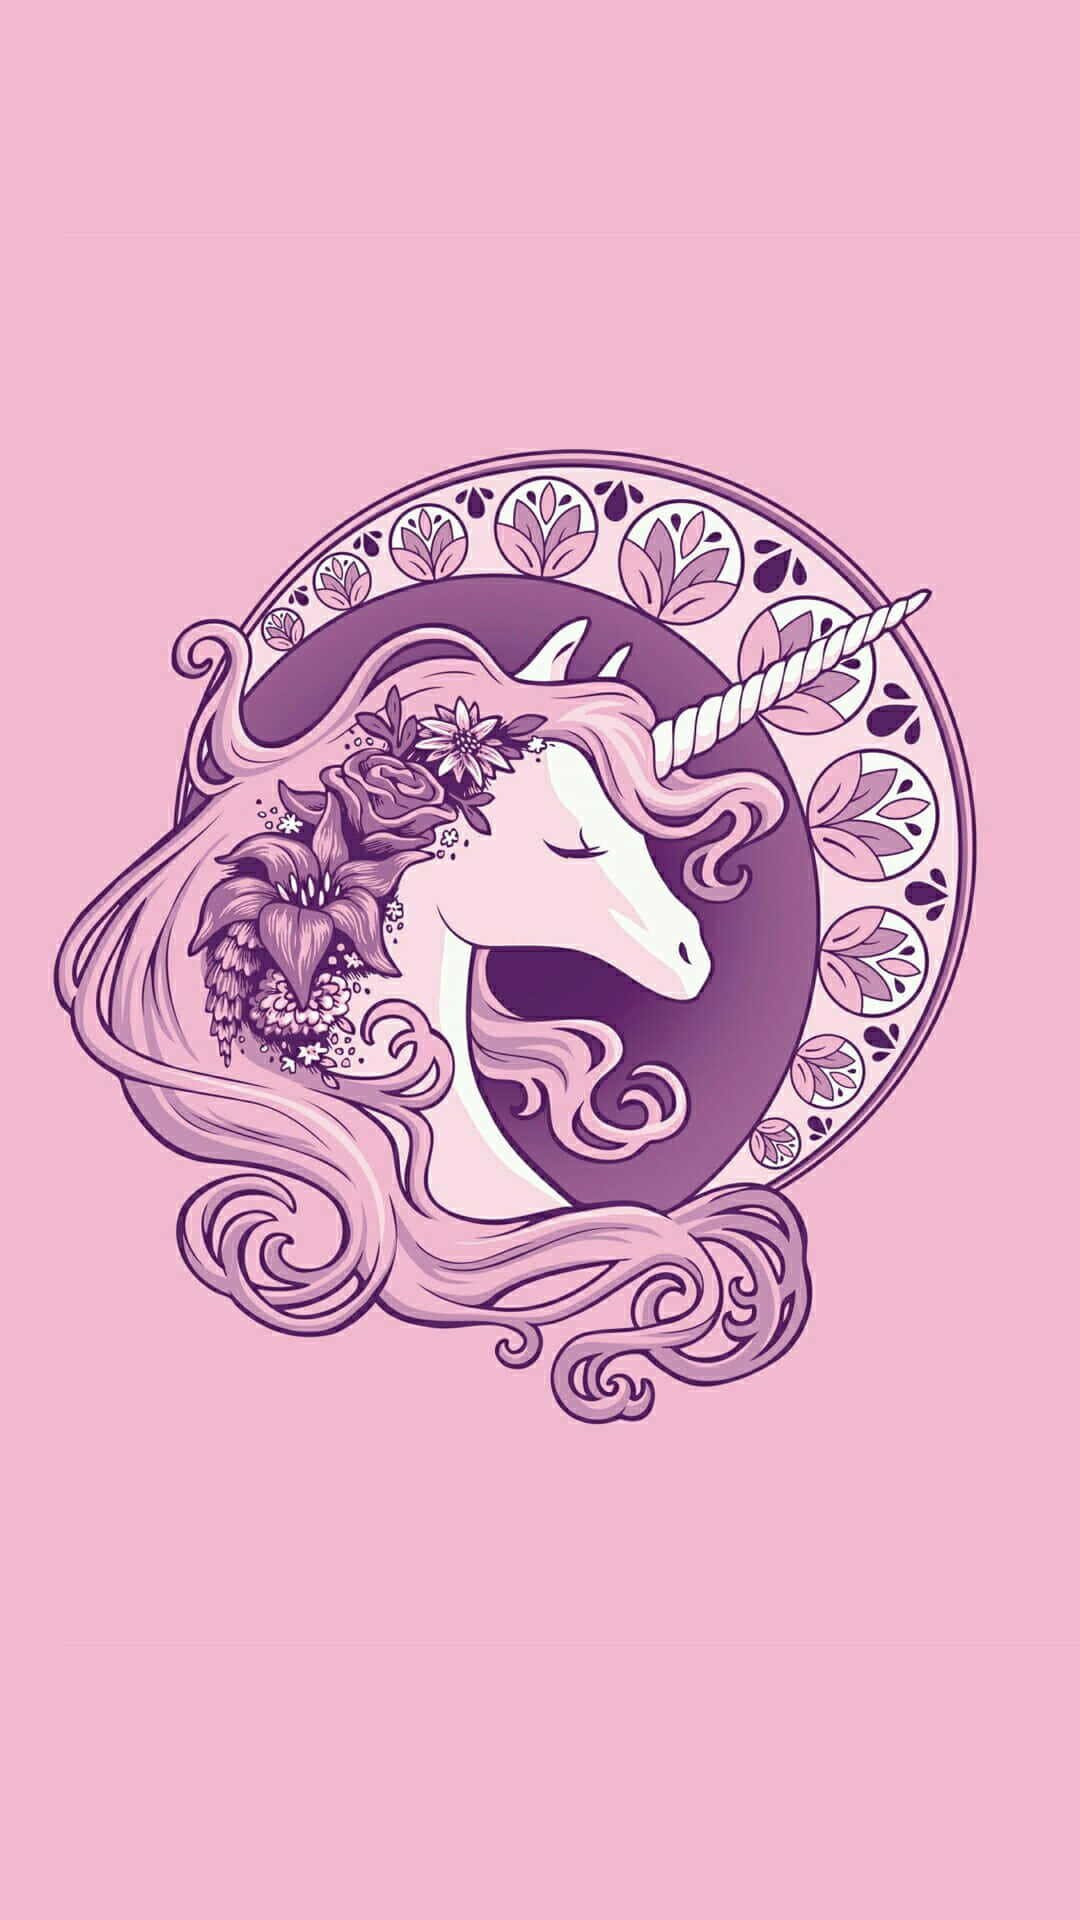 Magical Cute Unicorn in a Dreamy Wonderland Wallpaper